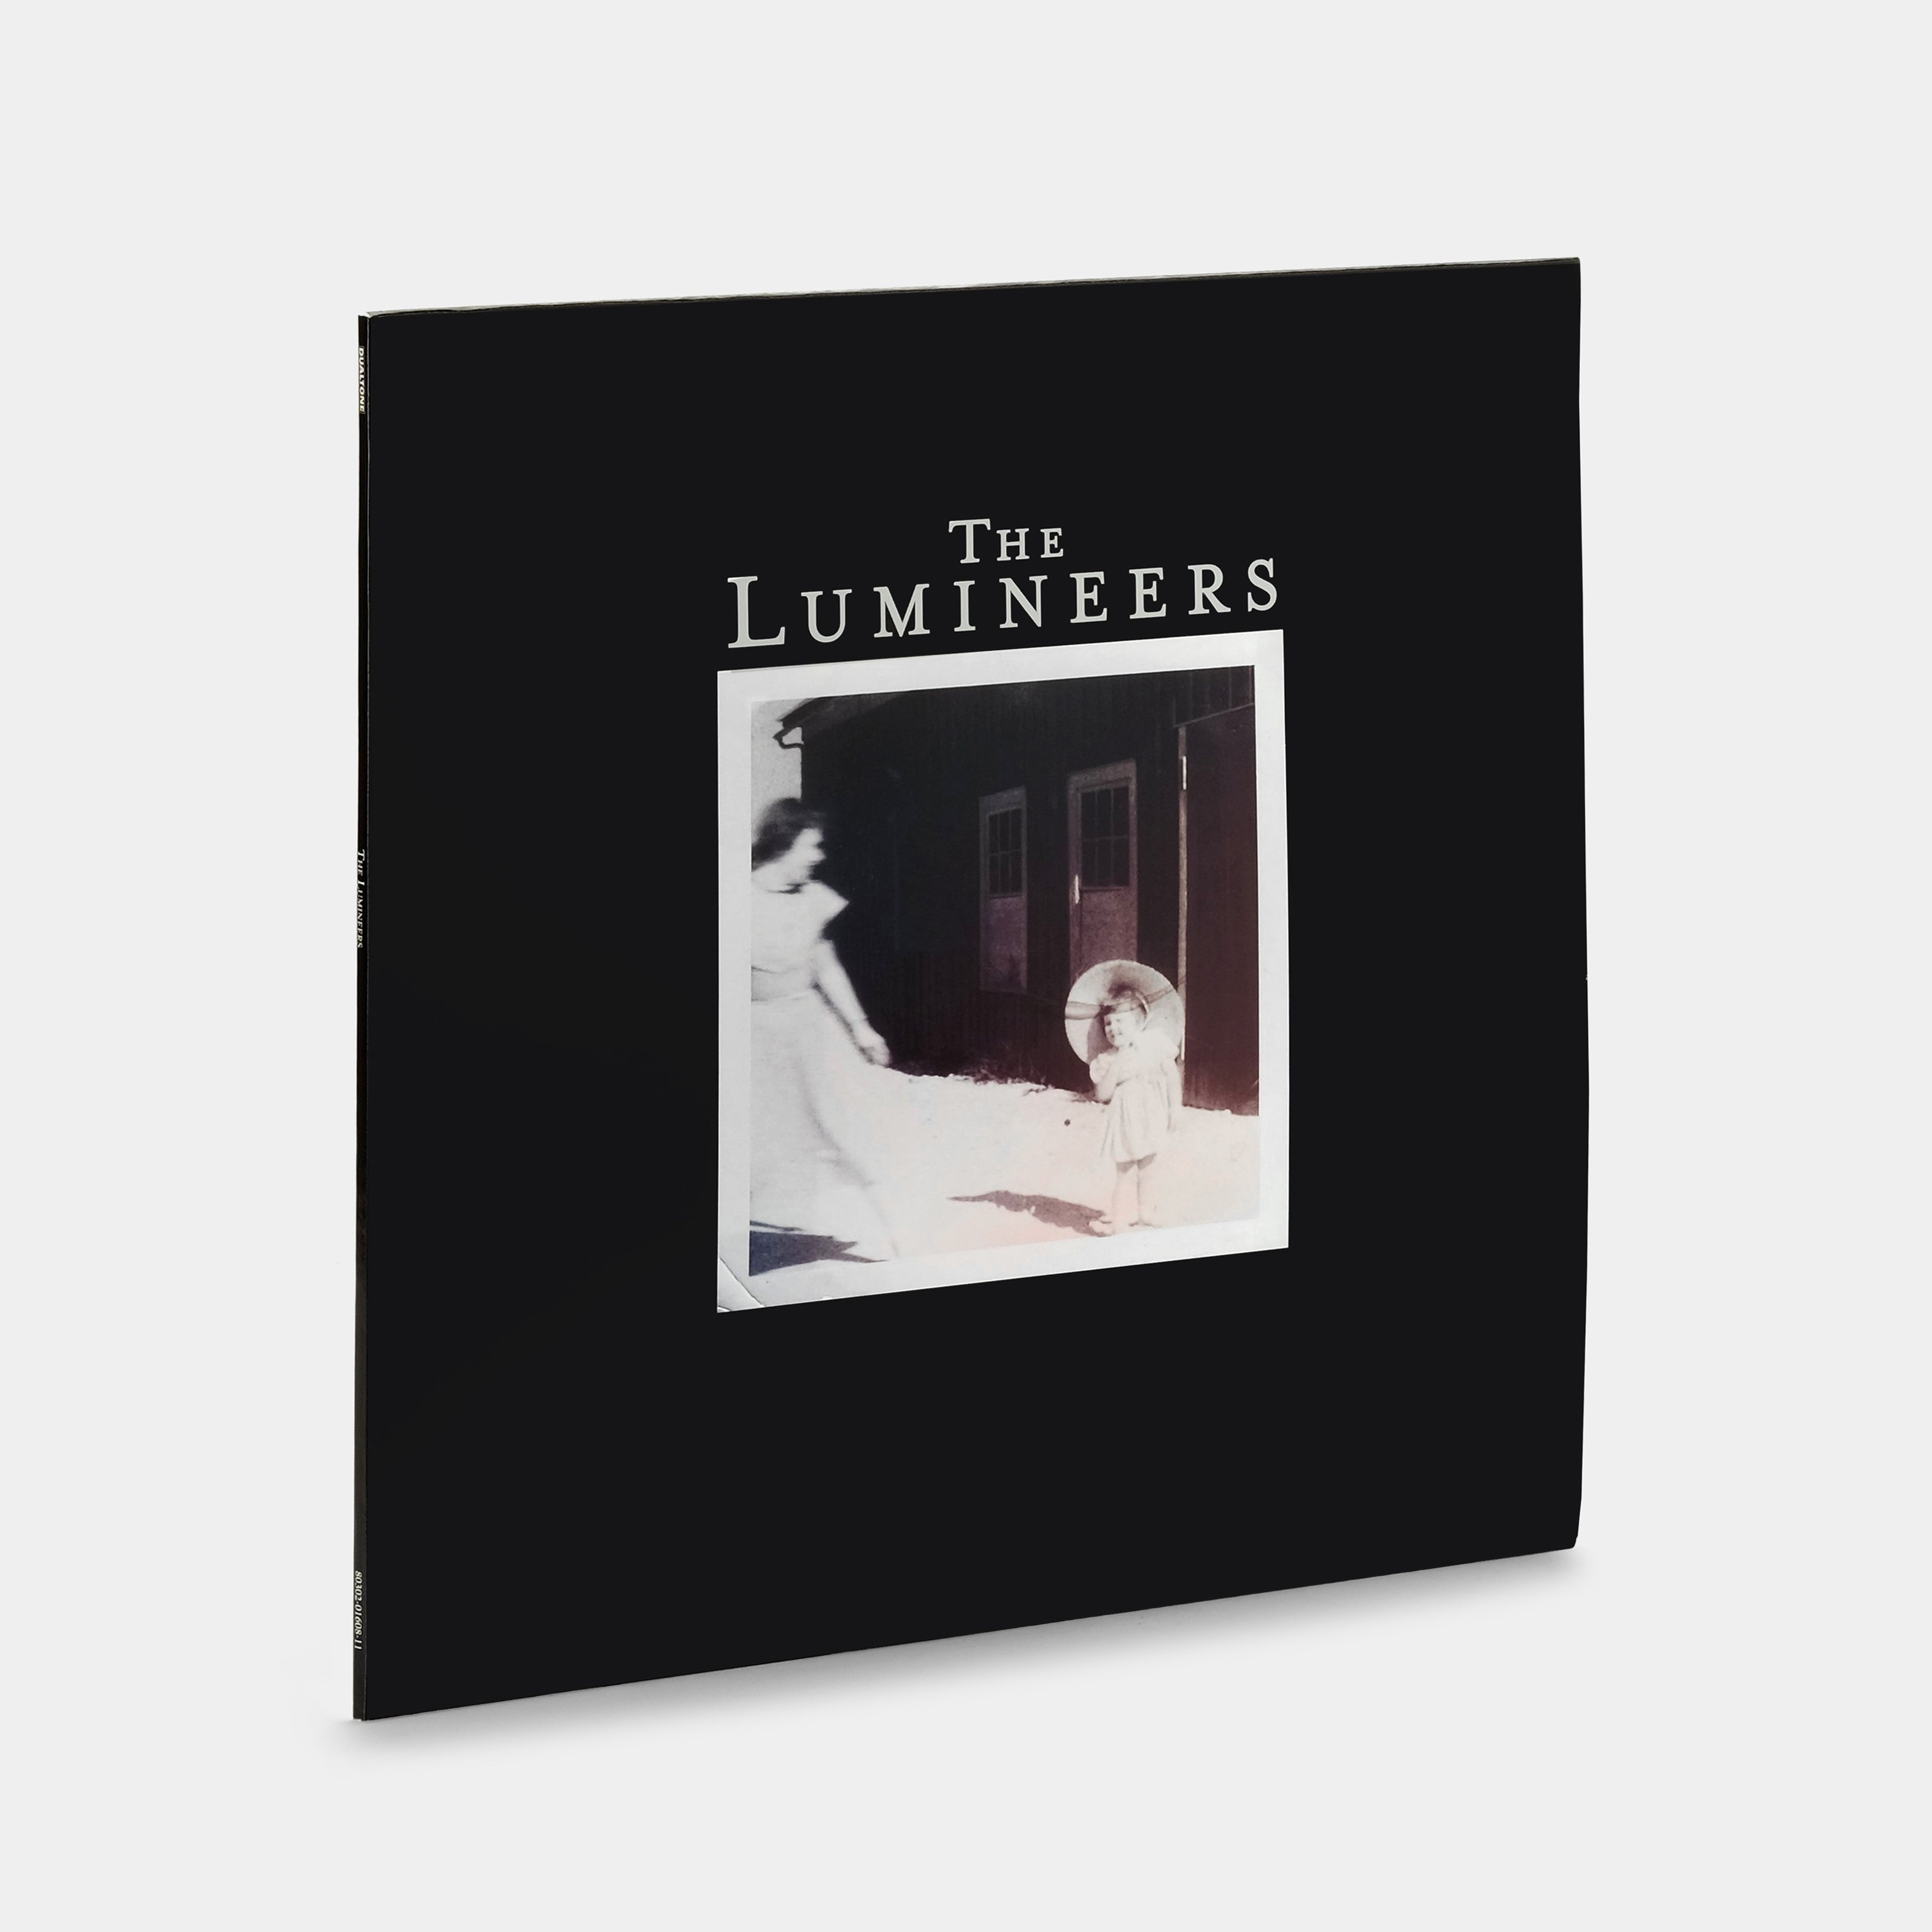 The Lumineers - The Lumineers LP Vinyl Record